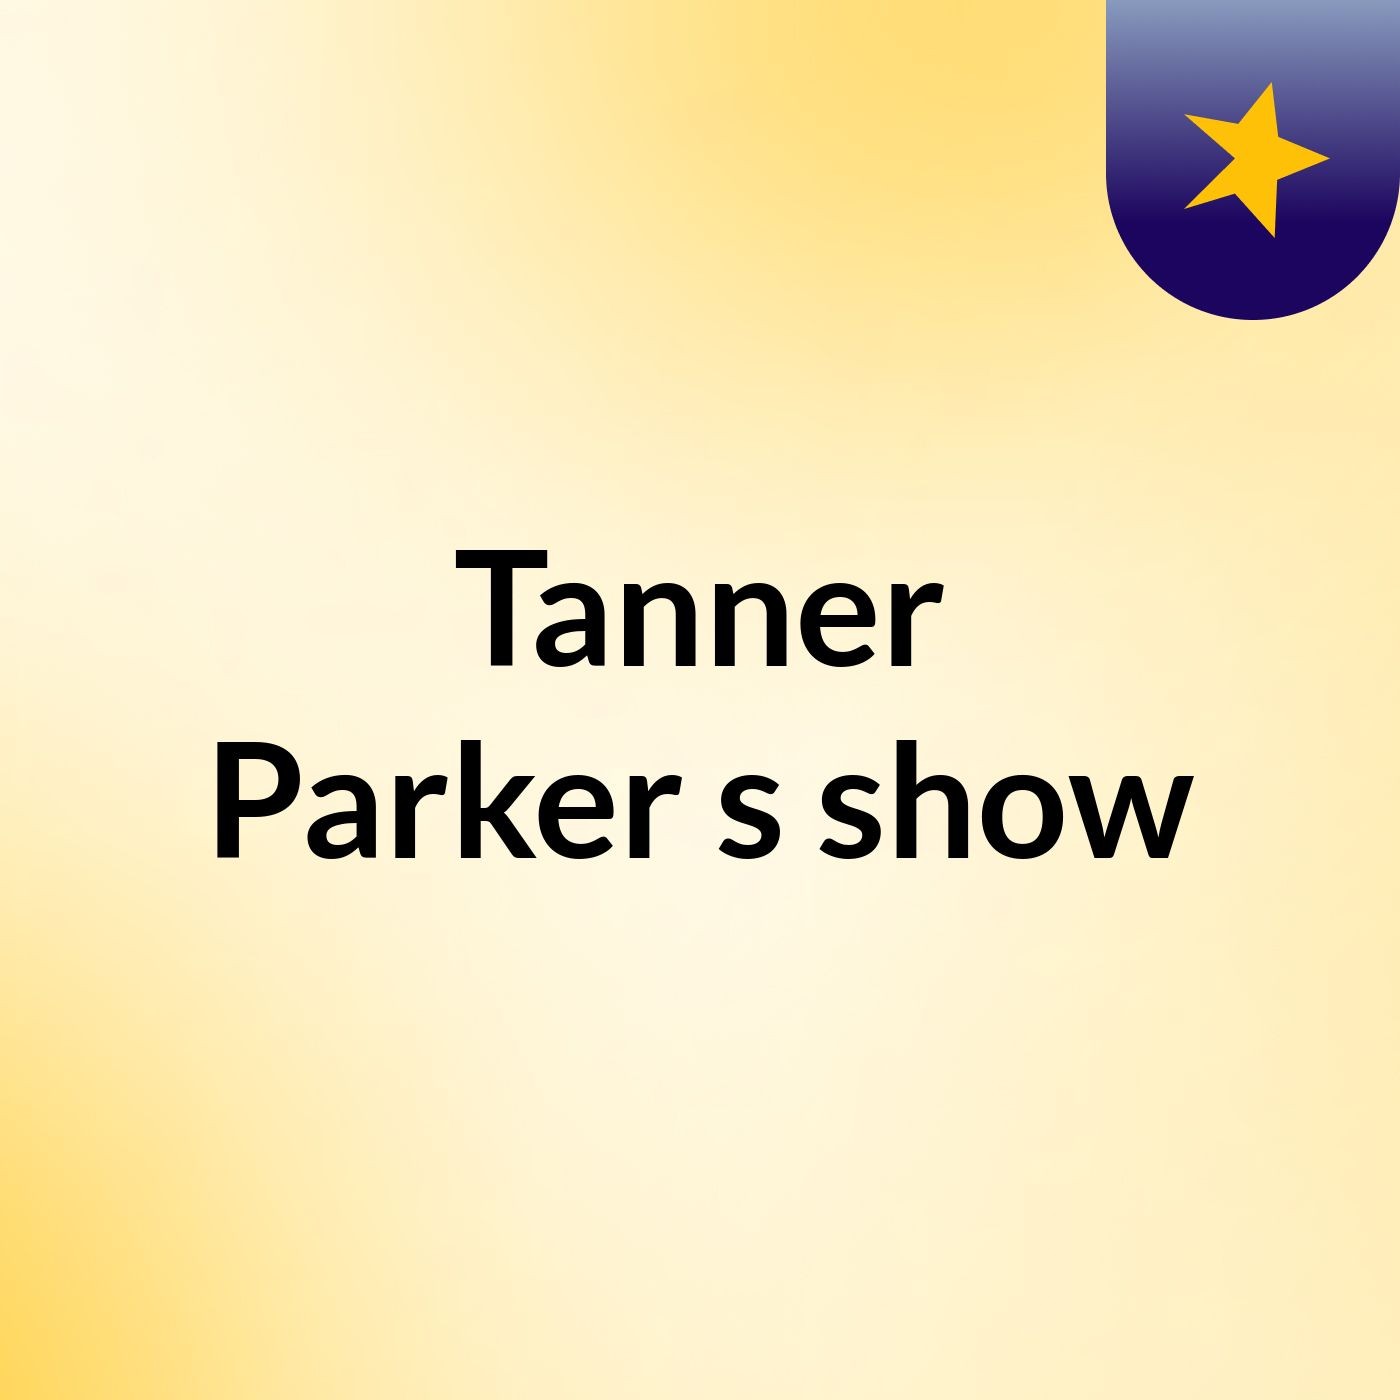 Episode 2 - Tanner Parker's show